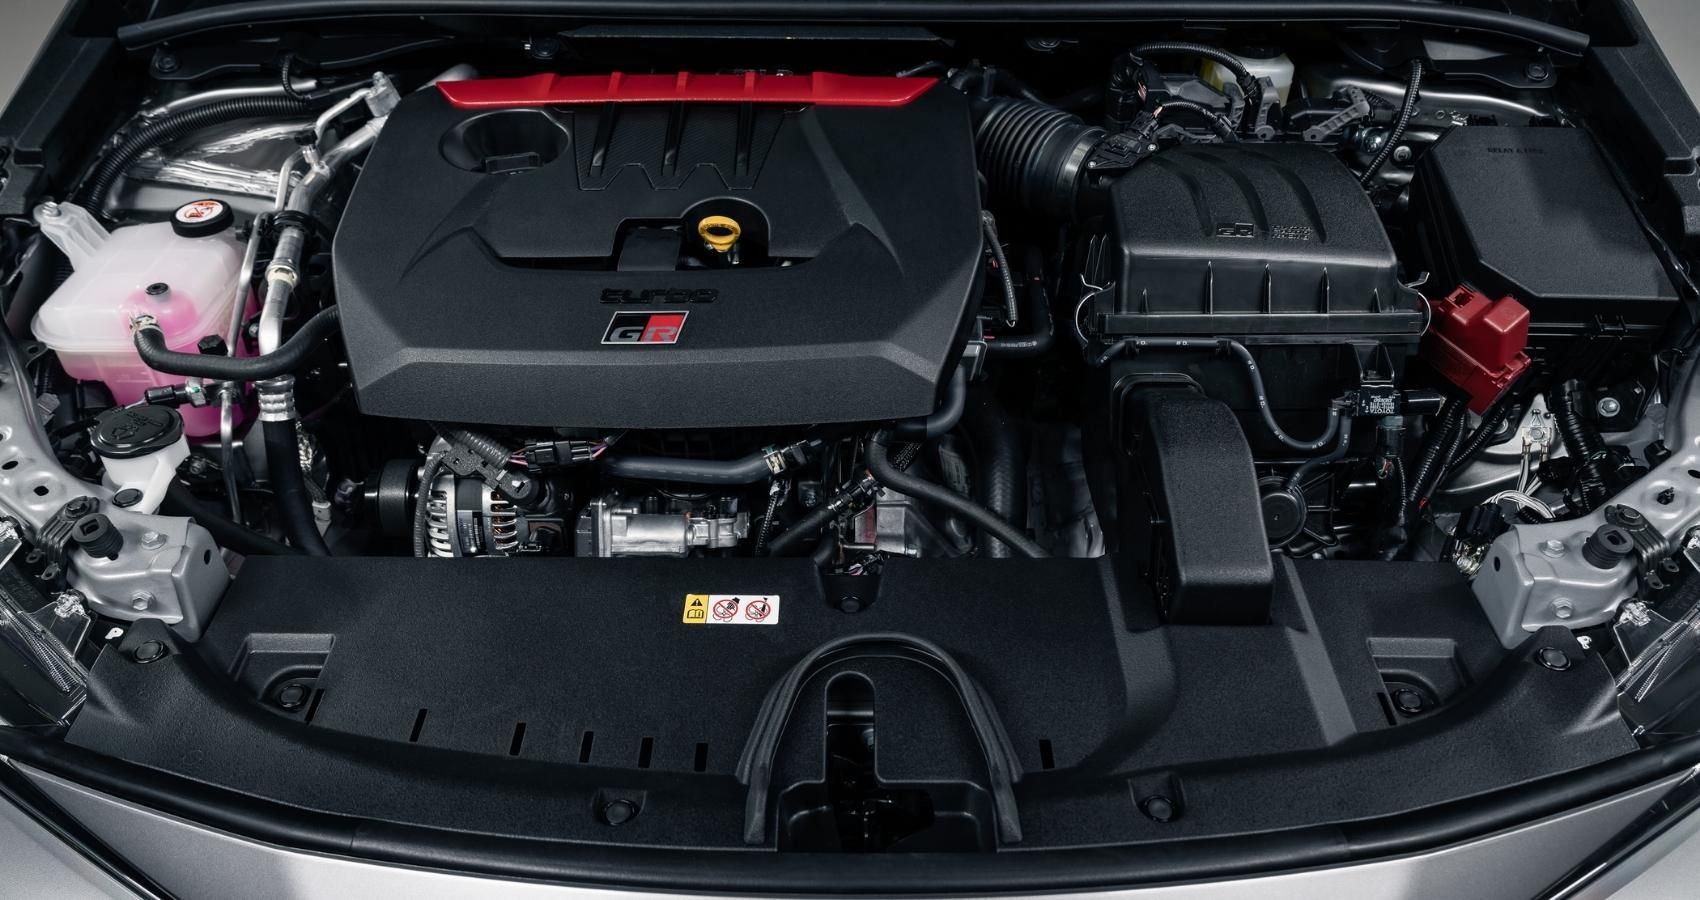 Toyota GR Corolla Engine Bay